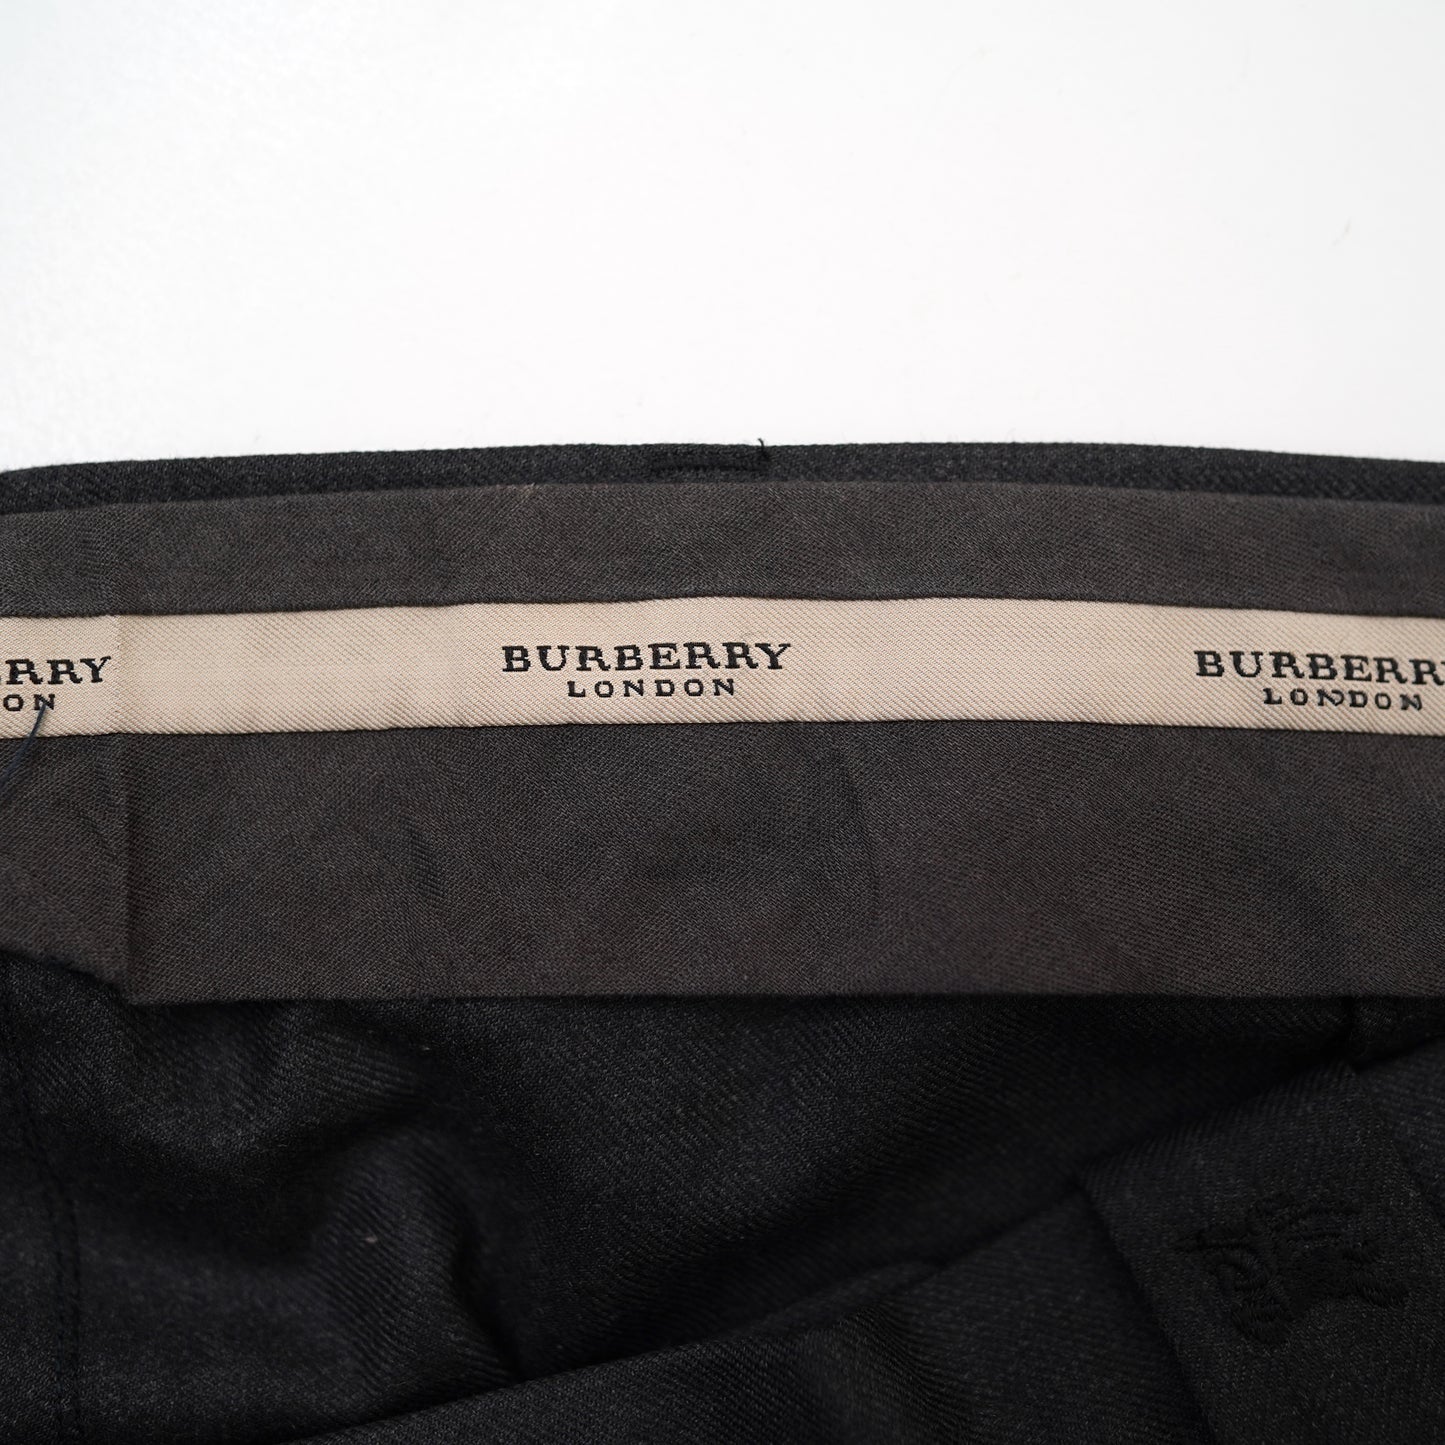 Burberry one tuck long pants